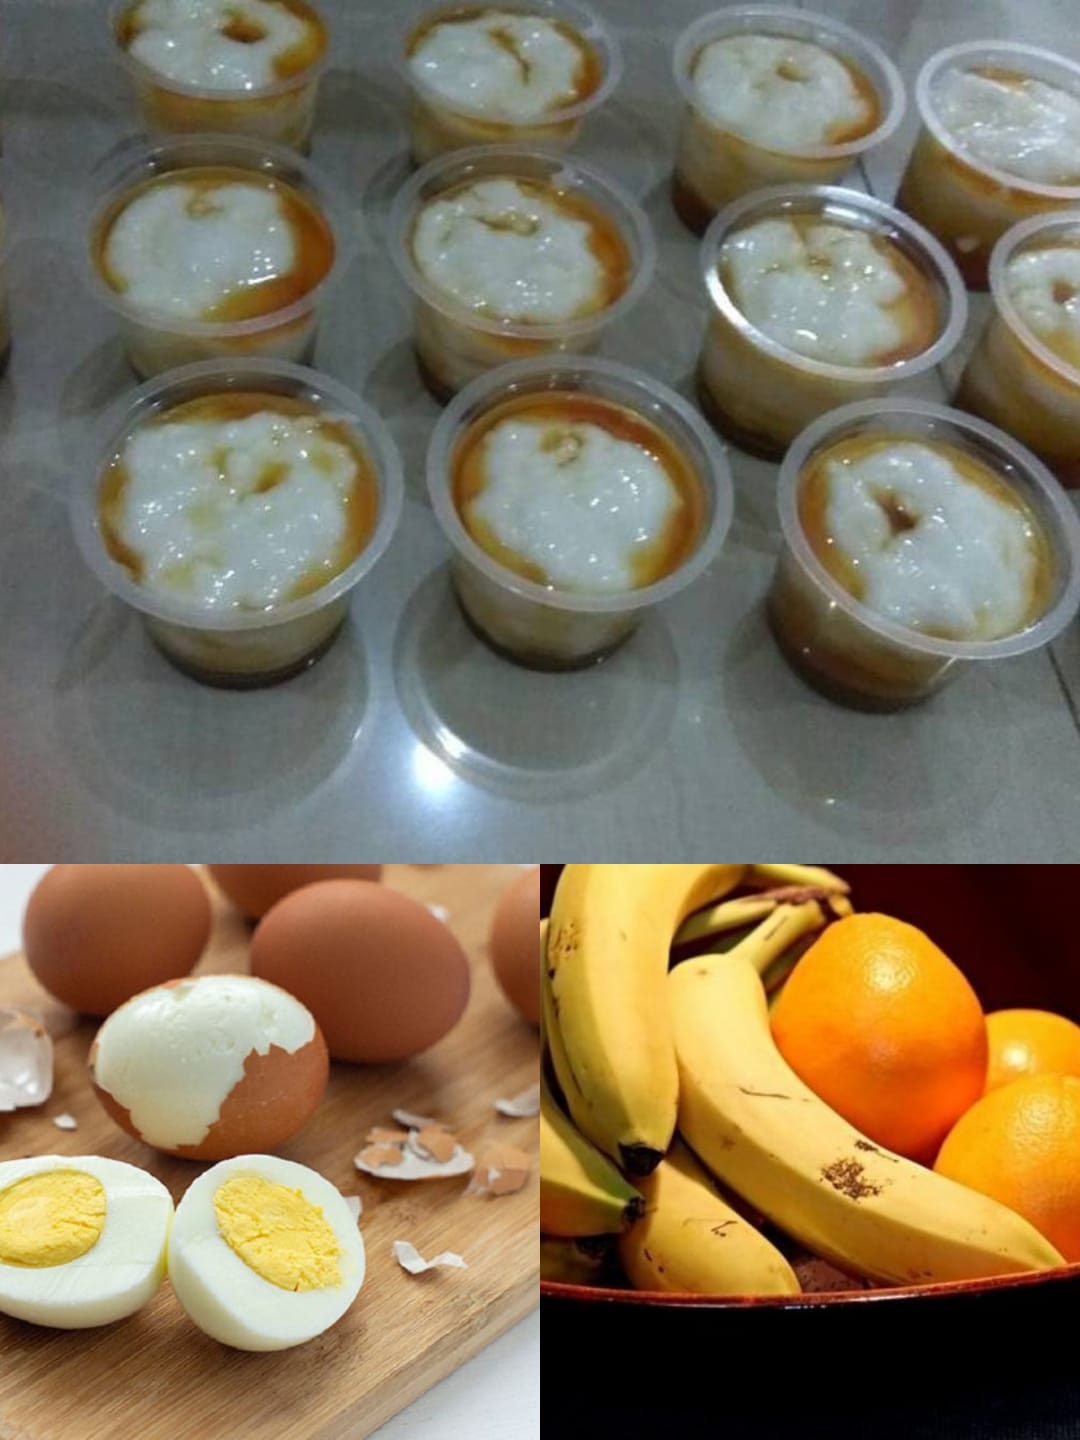 PAKET 2 (Bubur Sum-sum, Telur dan Pisang/jeruk)